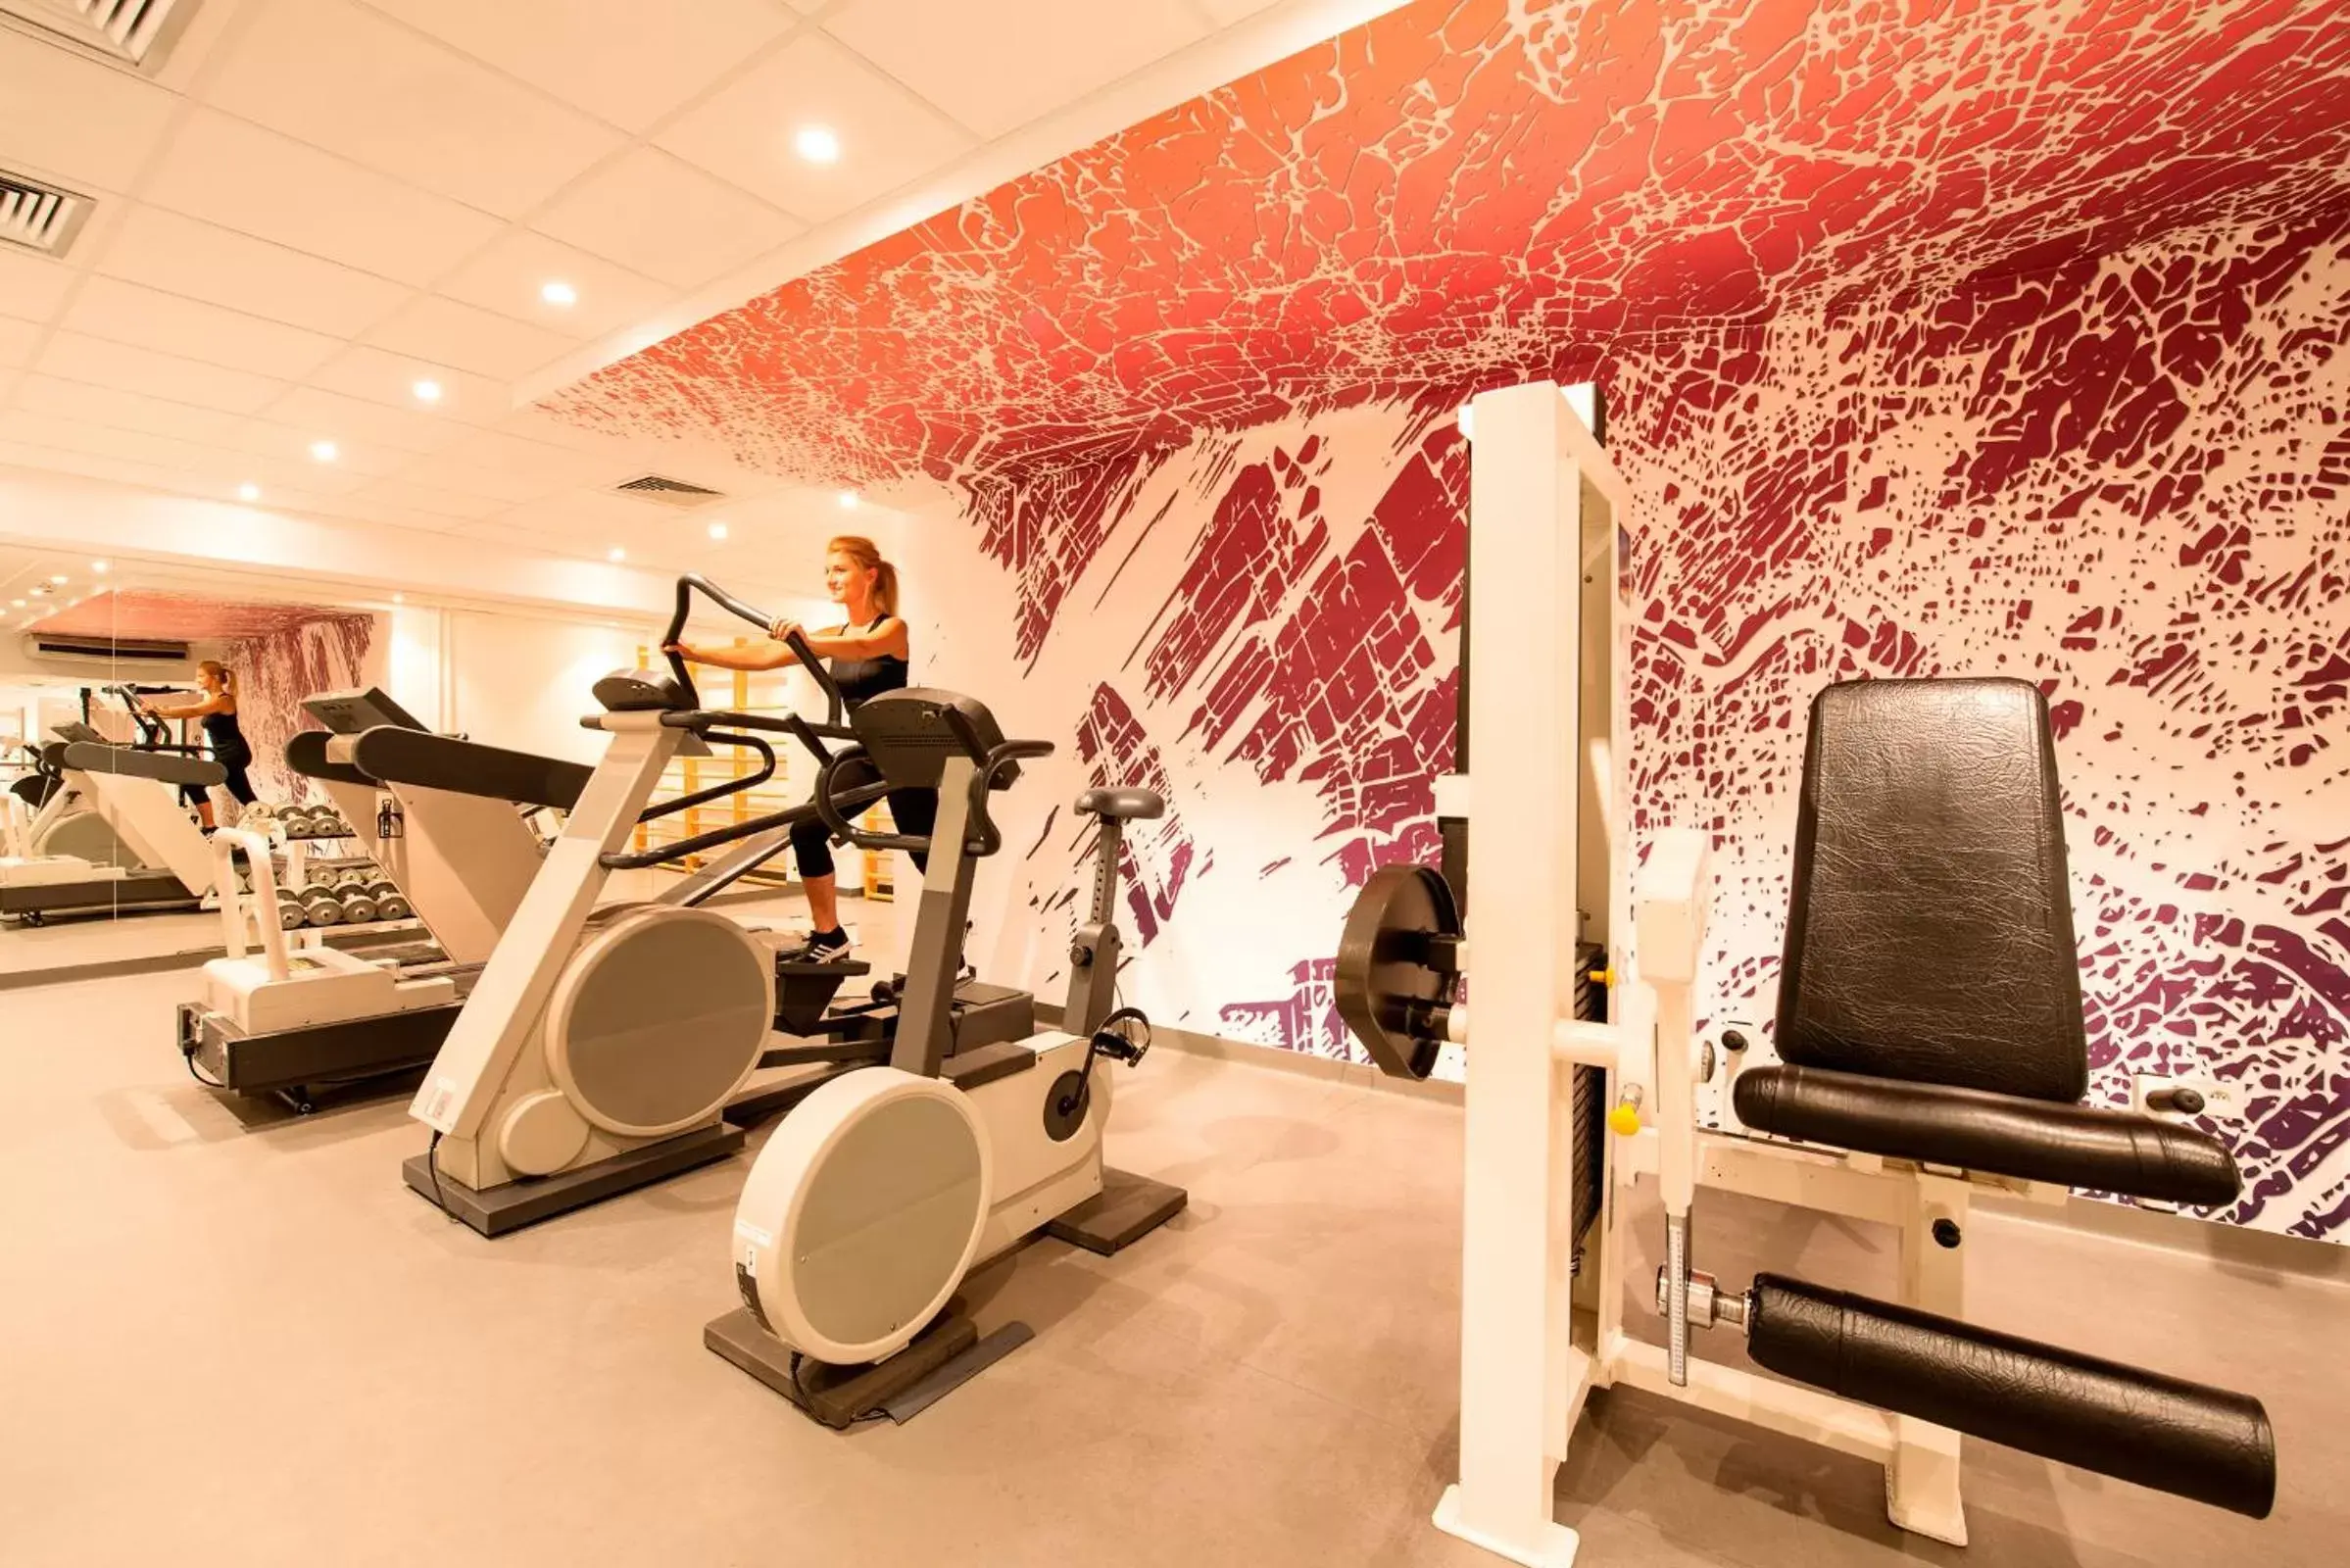 Fitness centre/facilities, Fitness Center/Facilities in Mercure Warszawa Centrum